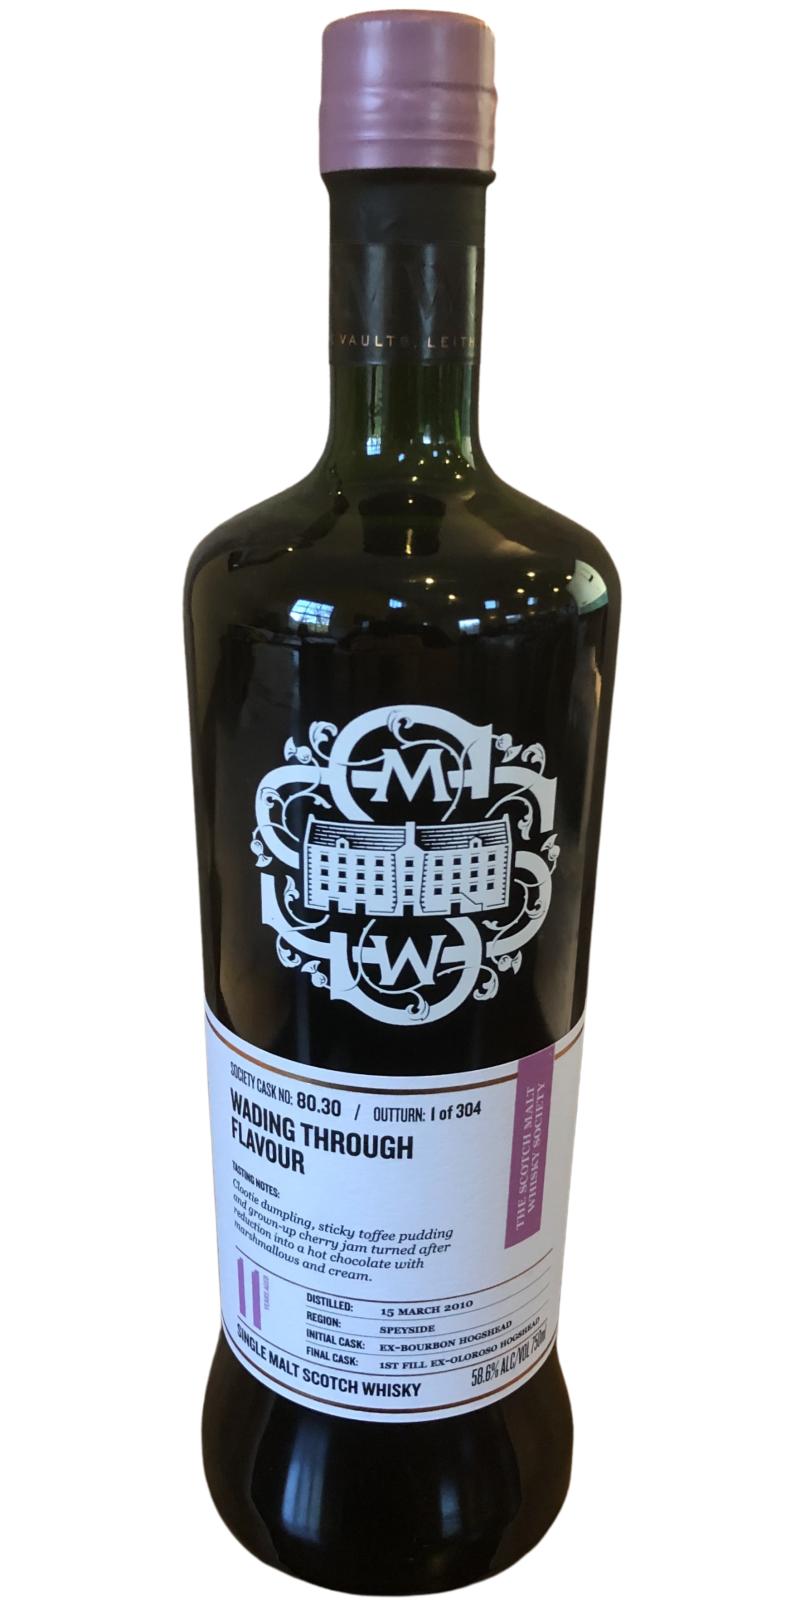 Glen Spey 2010 SMWS 80.30 Wading through flavour 1st Fill Ex-Oloroso Sherry Hogshead Finish The Scotch Malt Whisky Society 58.6% 750ml